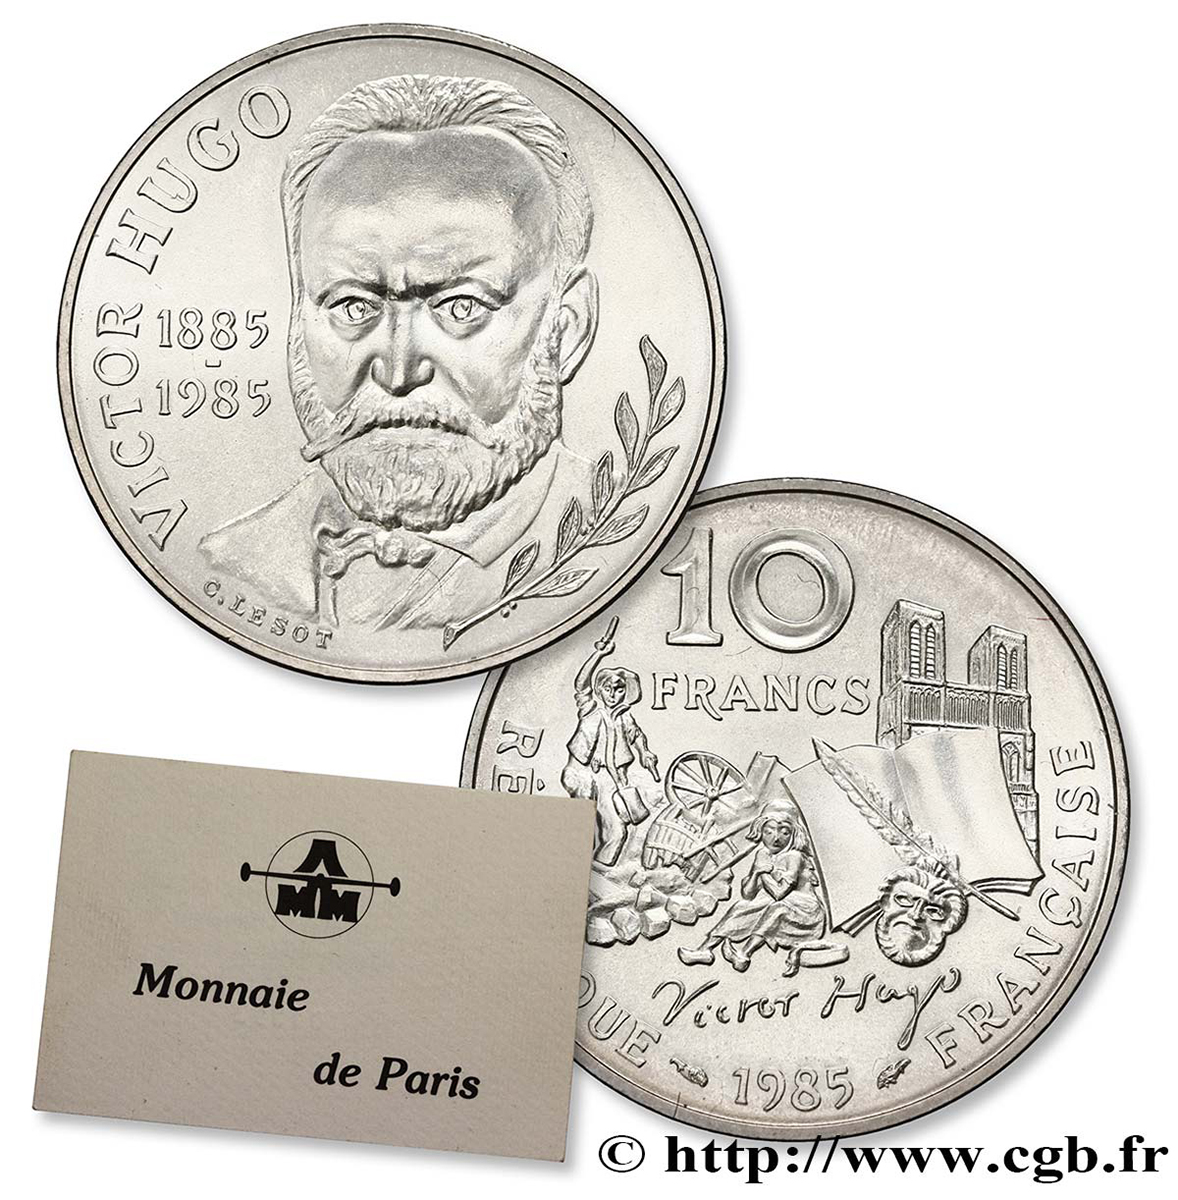 Brillant Universel argent 10 francs Victor Hugo 1985 Paris F5.1300 2 MS68 